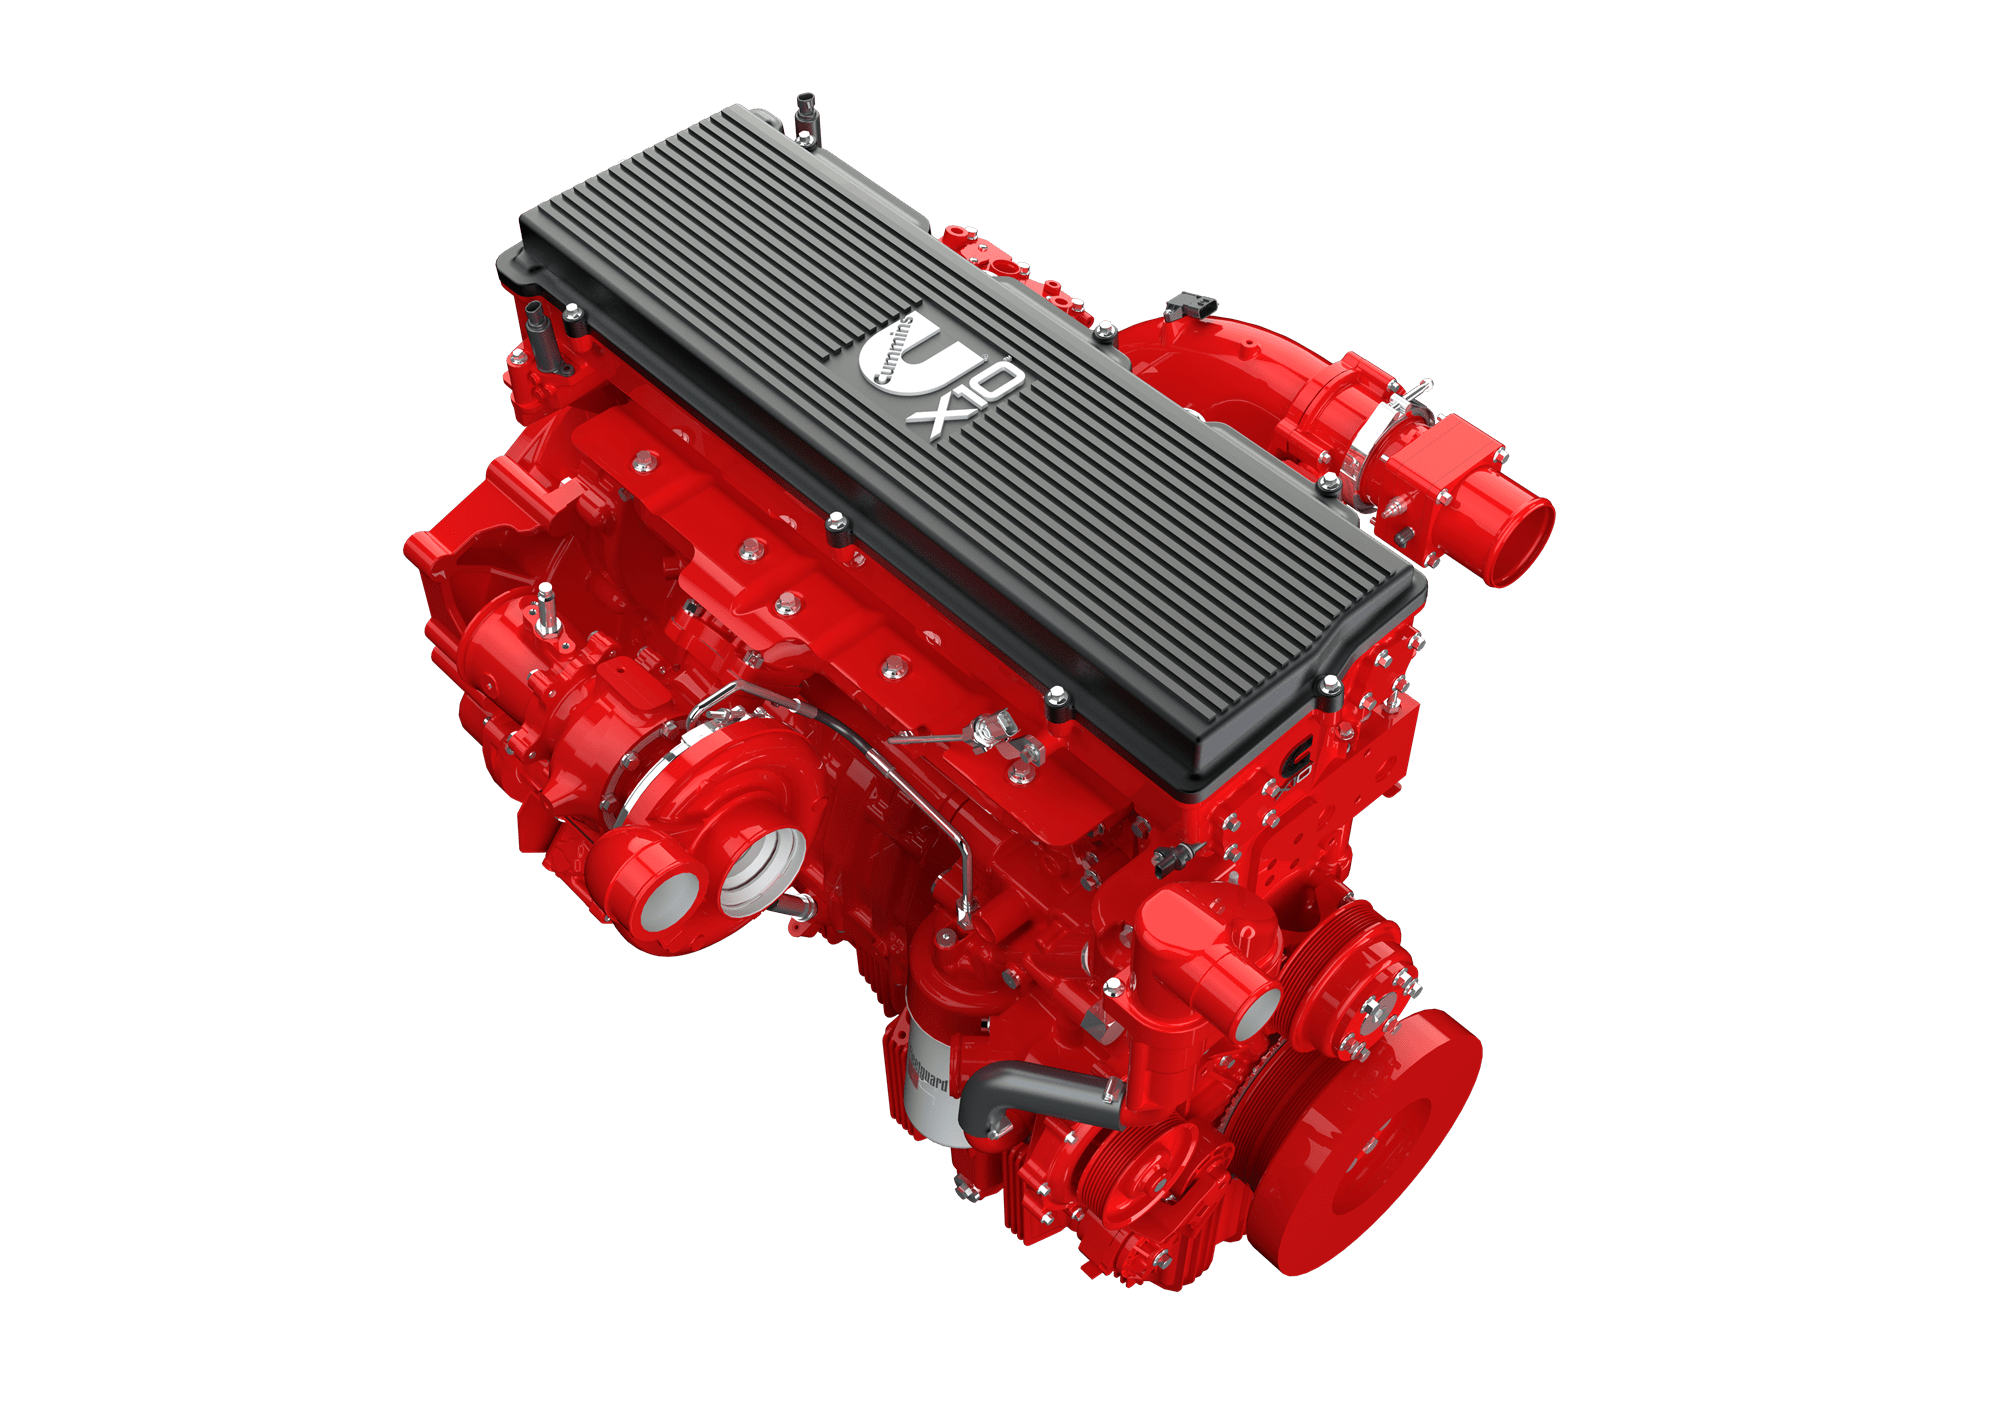 3. Cummins X10 Advanced Diesel Engine